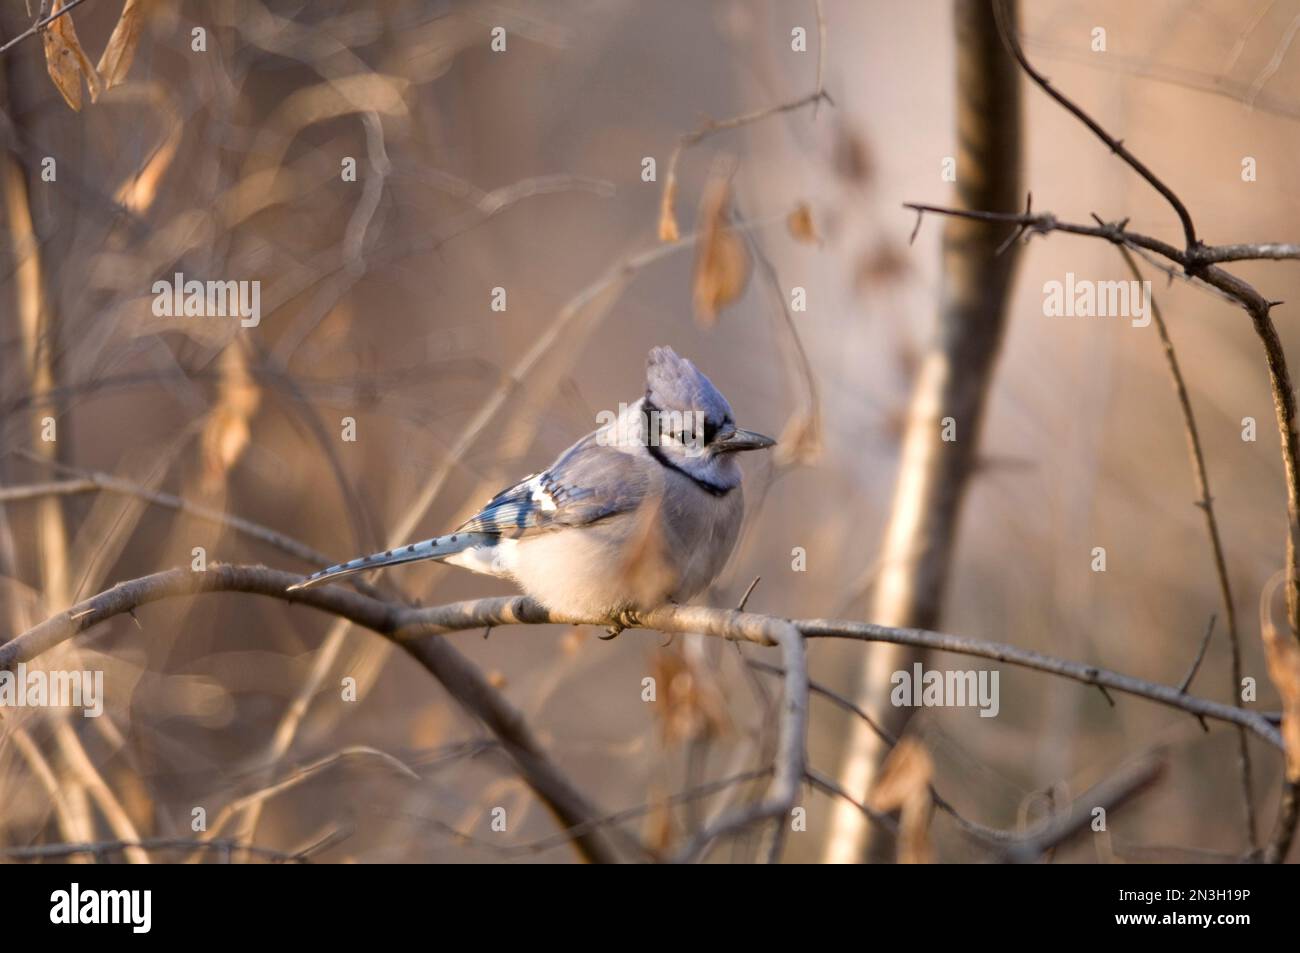 Blue jay beautiful bird image hi-res stock photography and images - Alamy